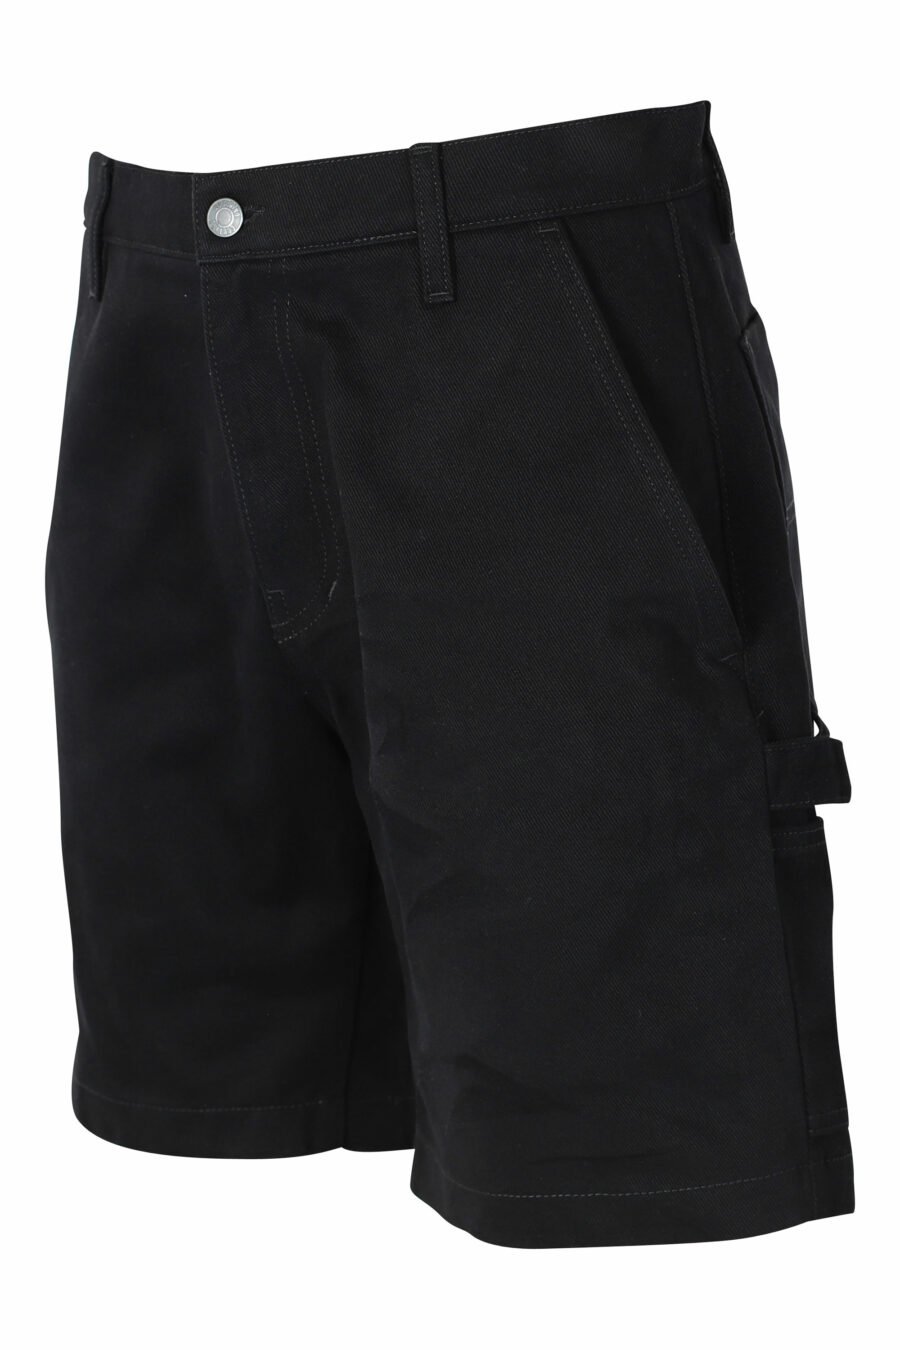 Short en denim noir avec poches latérales - IMG 9566